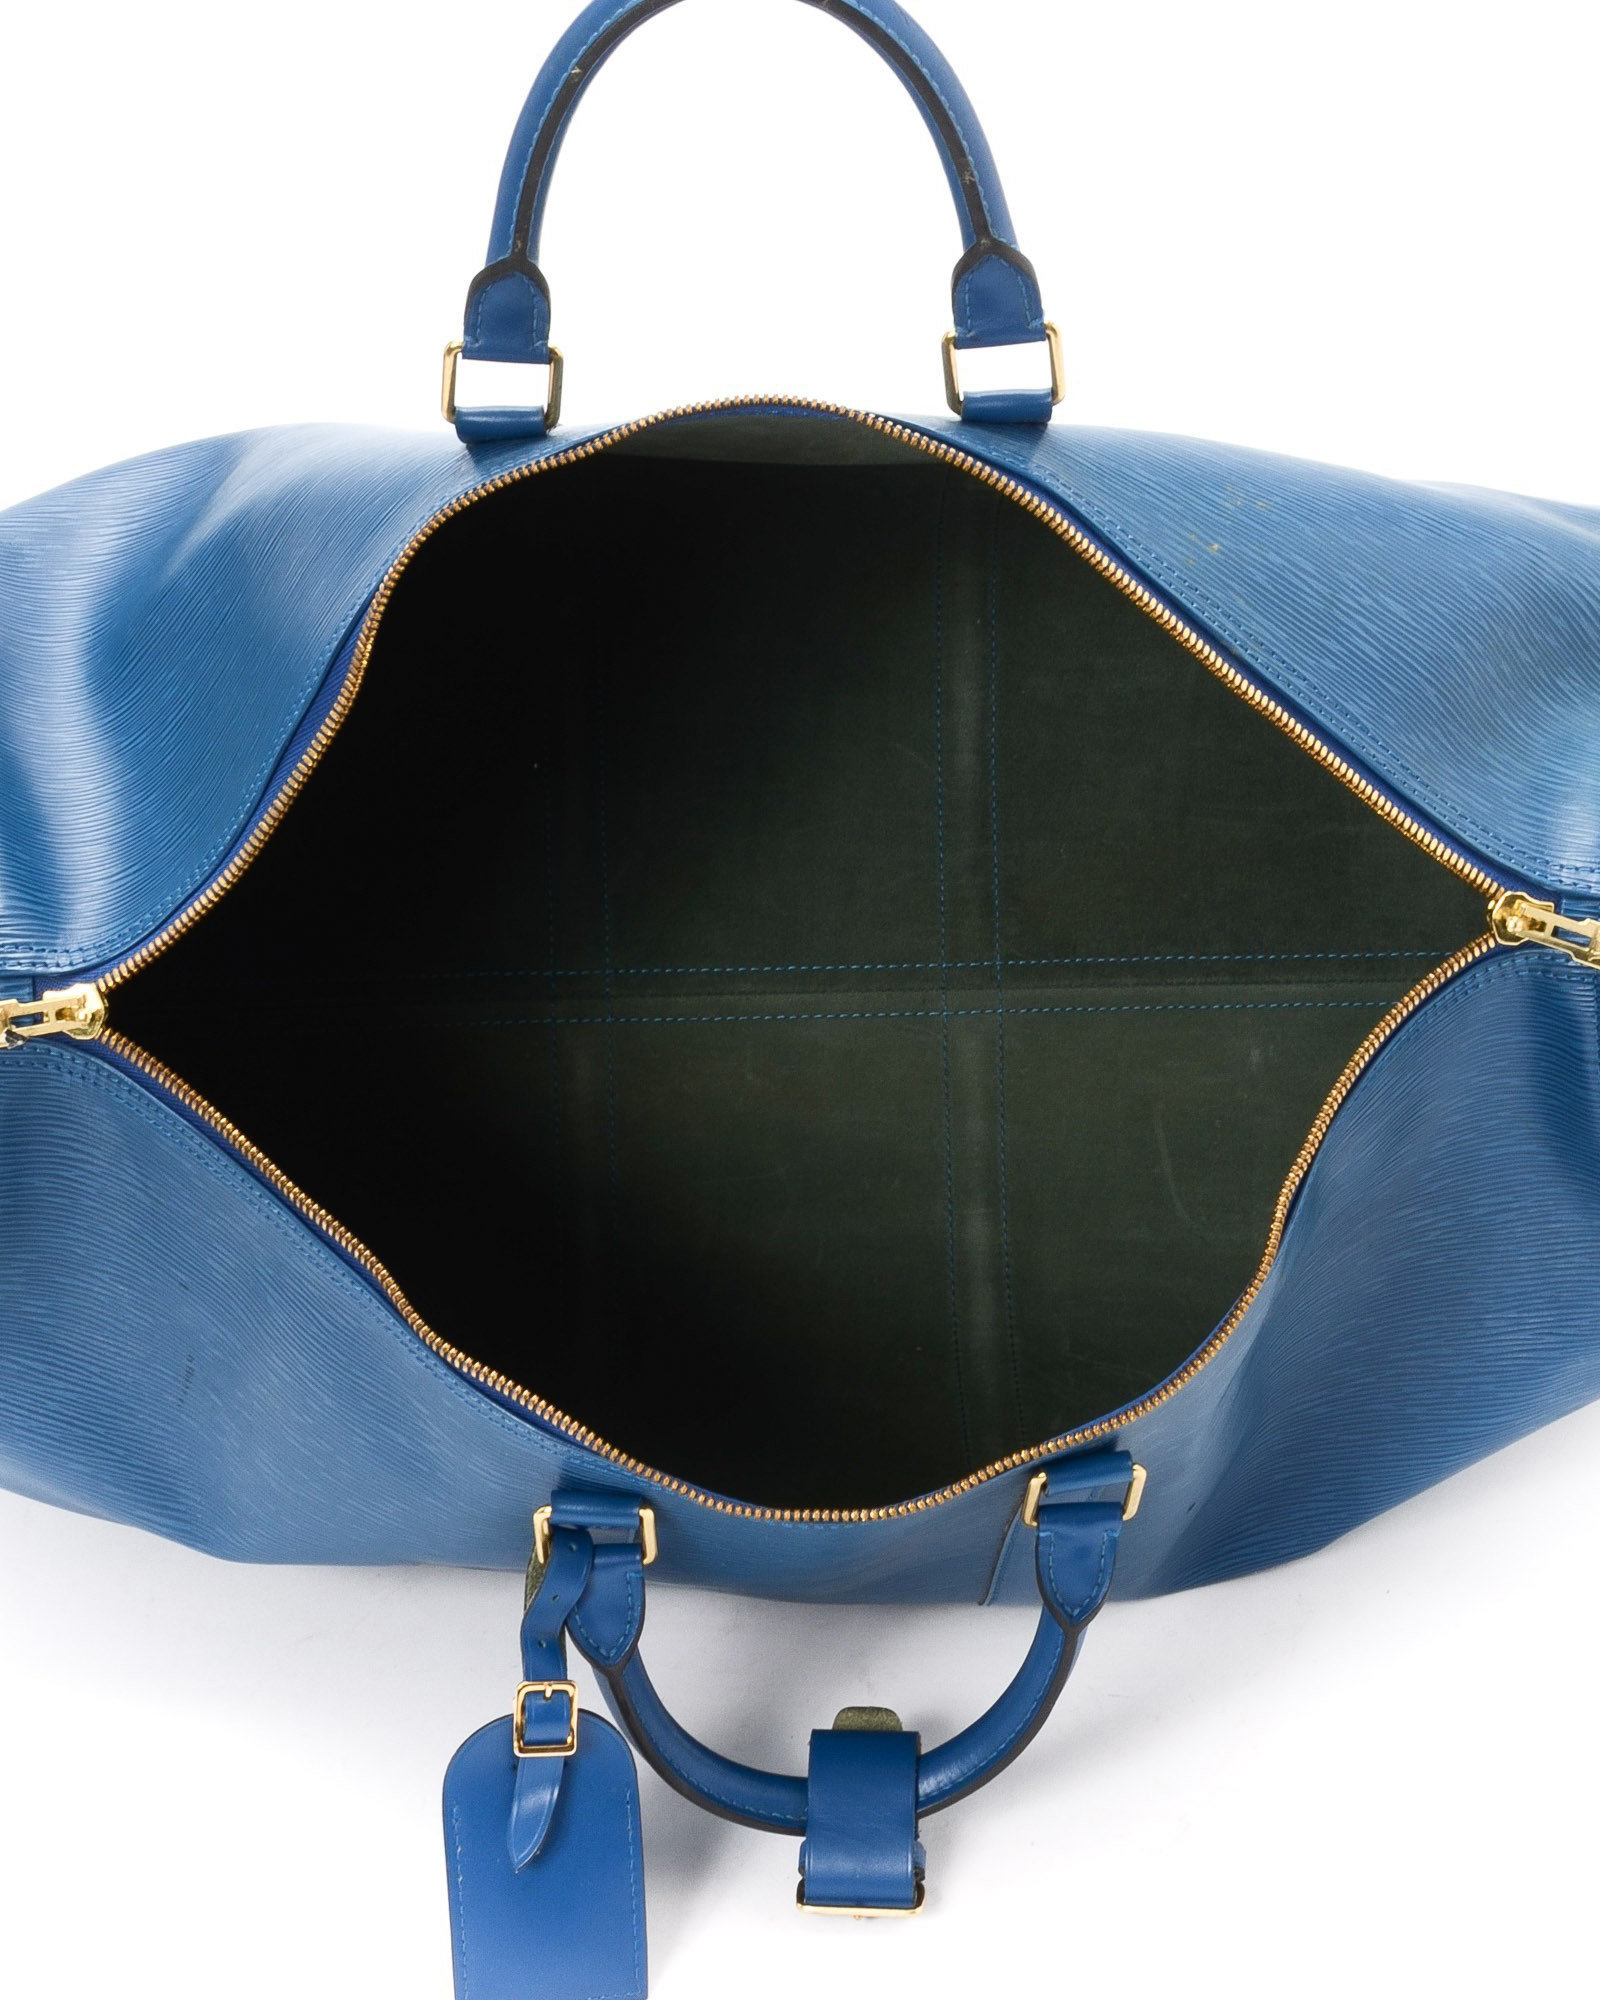 Lyst - Louis Vuitton Travel Bag - Vintage in Blue